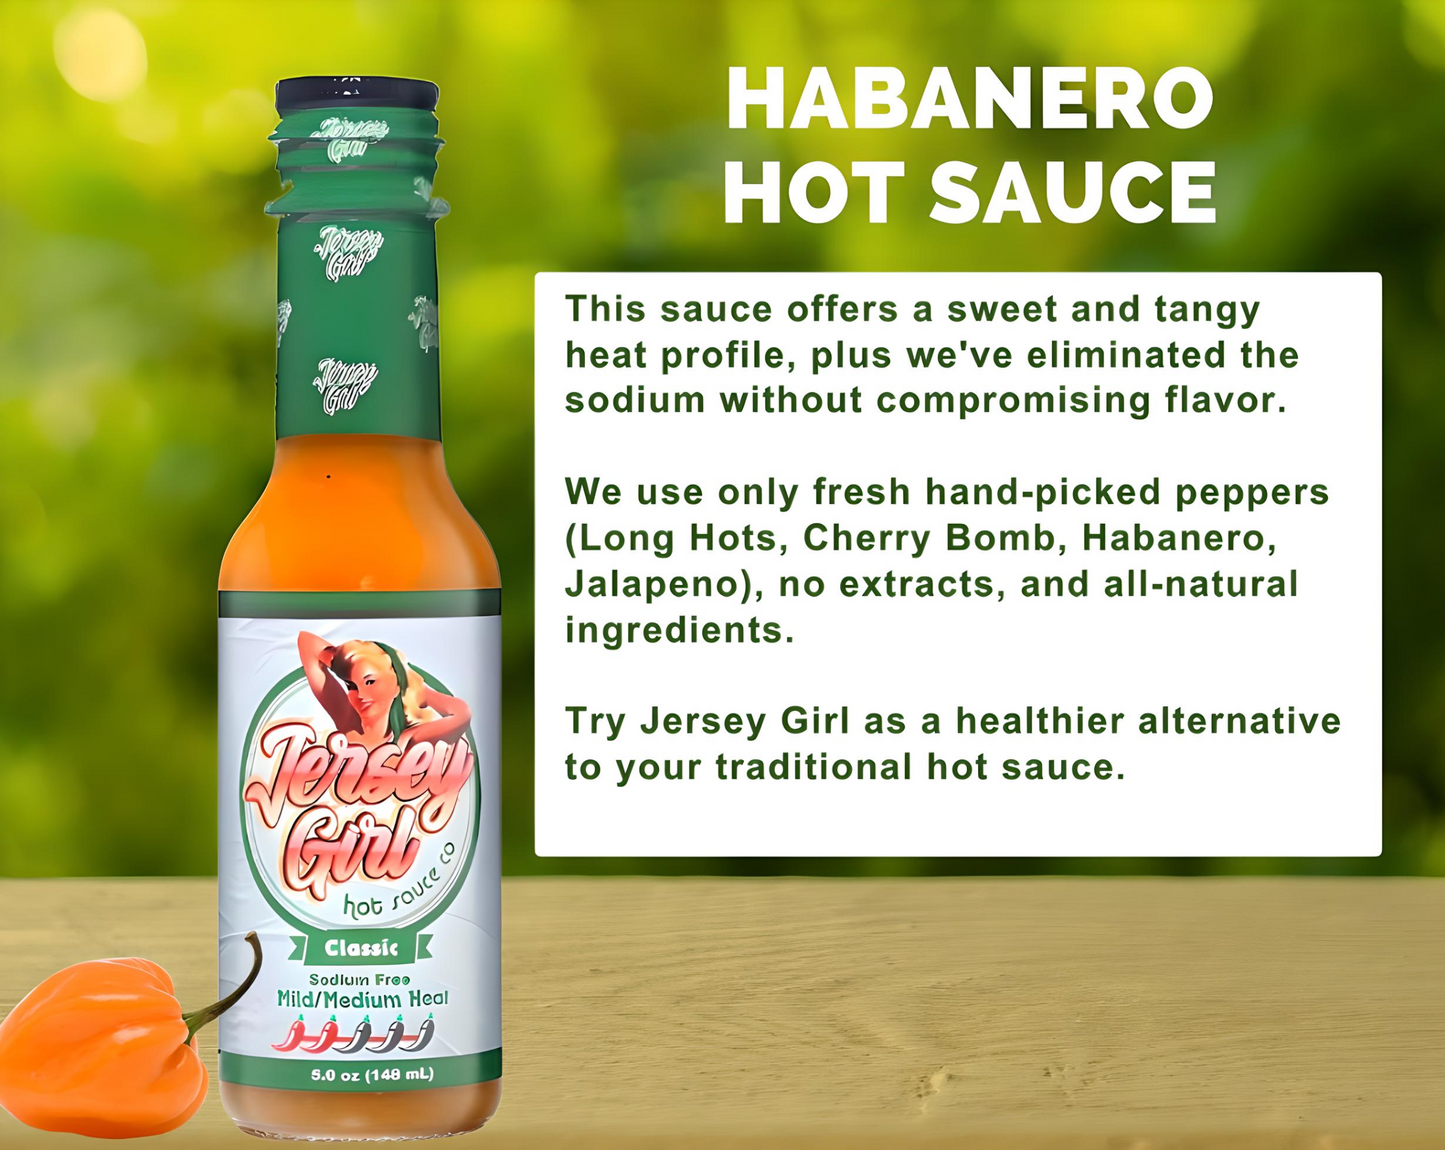 Jersey Girl Classic Habanero Hot Sauce